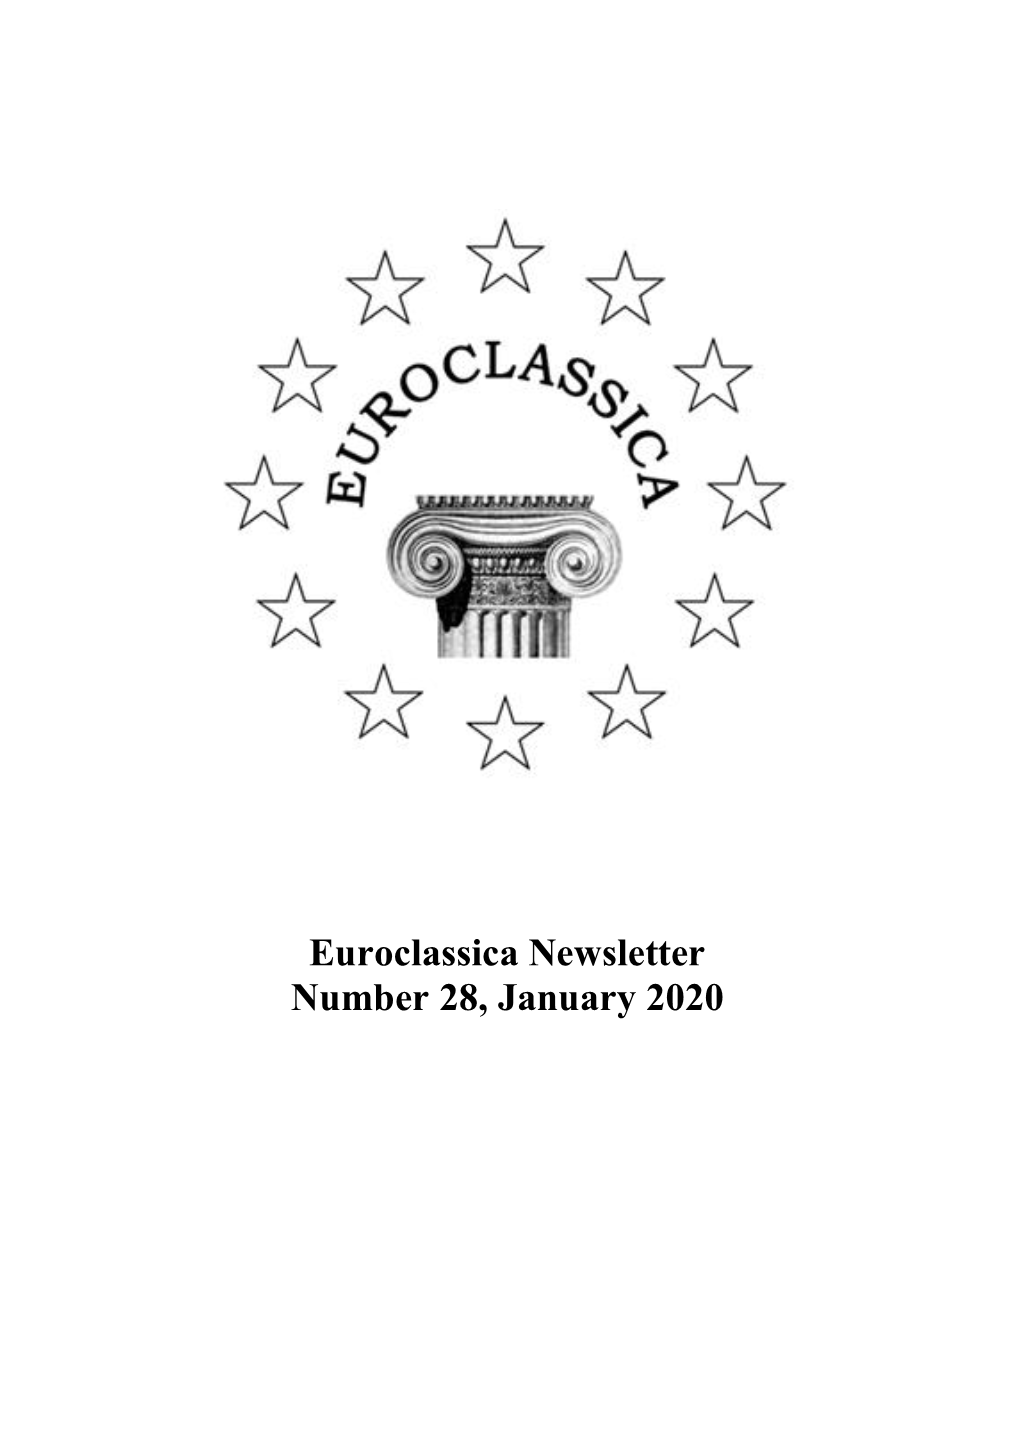 Euroclassica Newsletter Number 28, January 2020